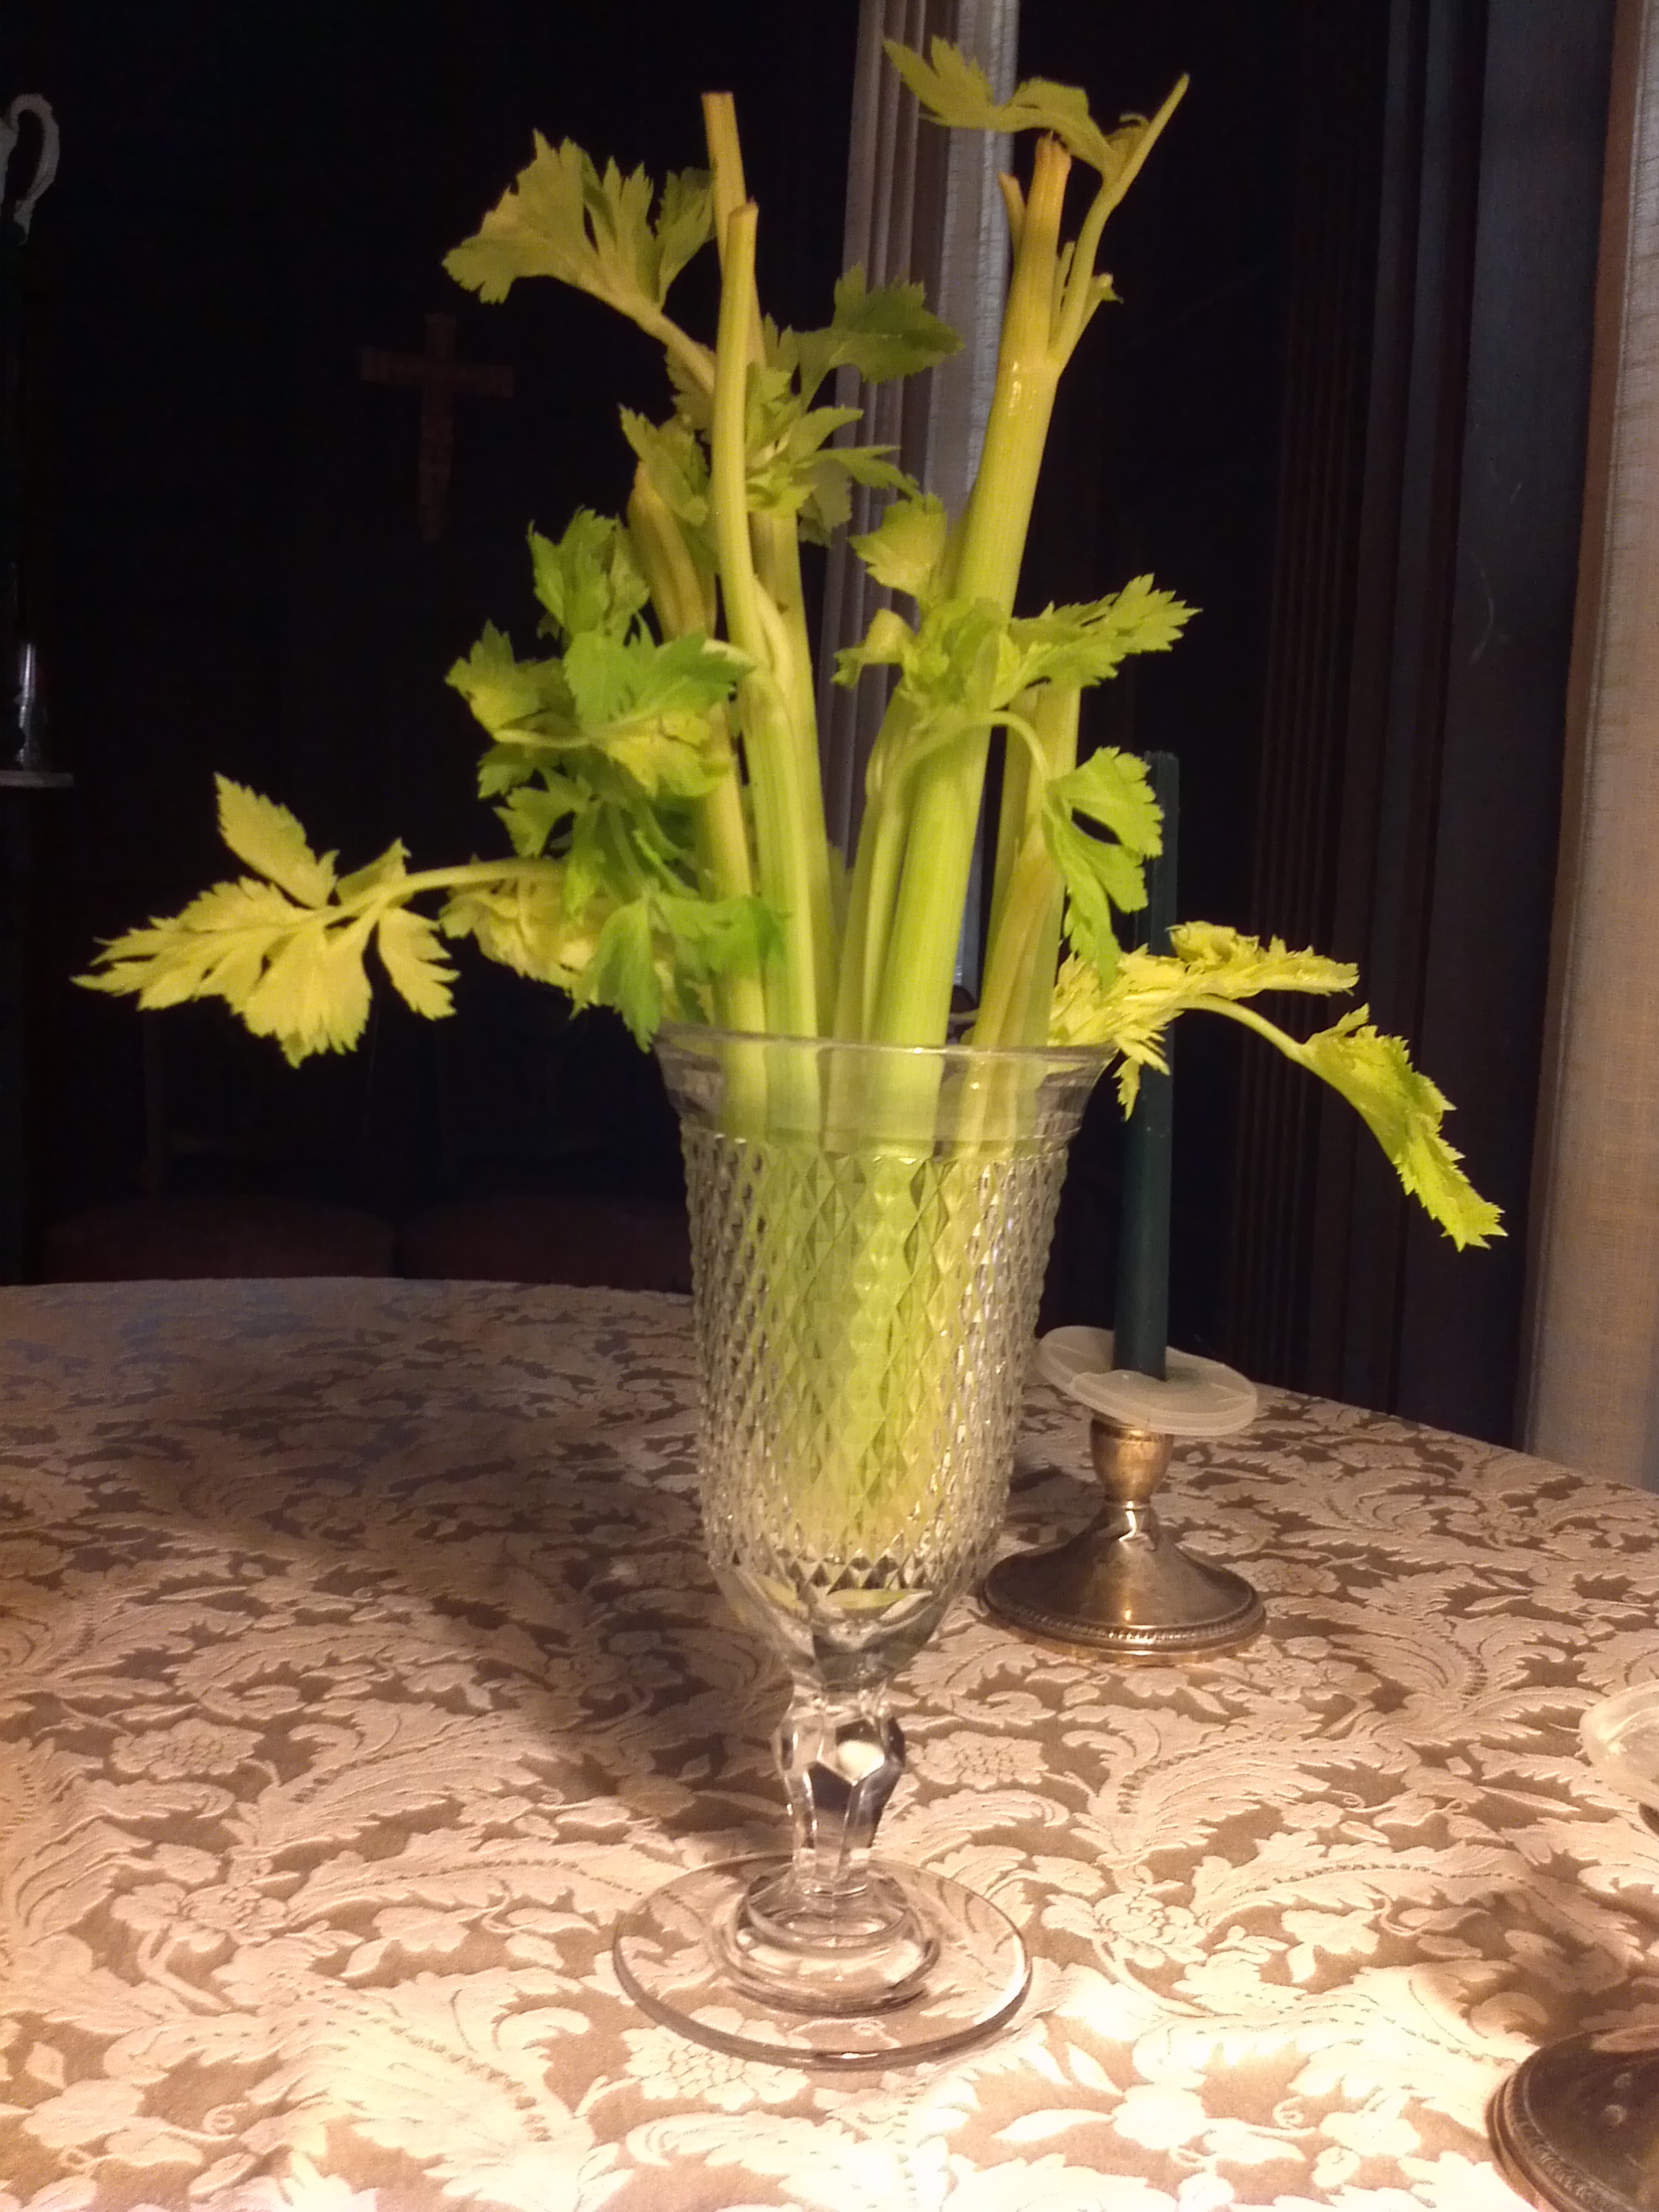 My grandmother's celery vase